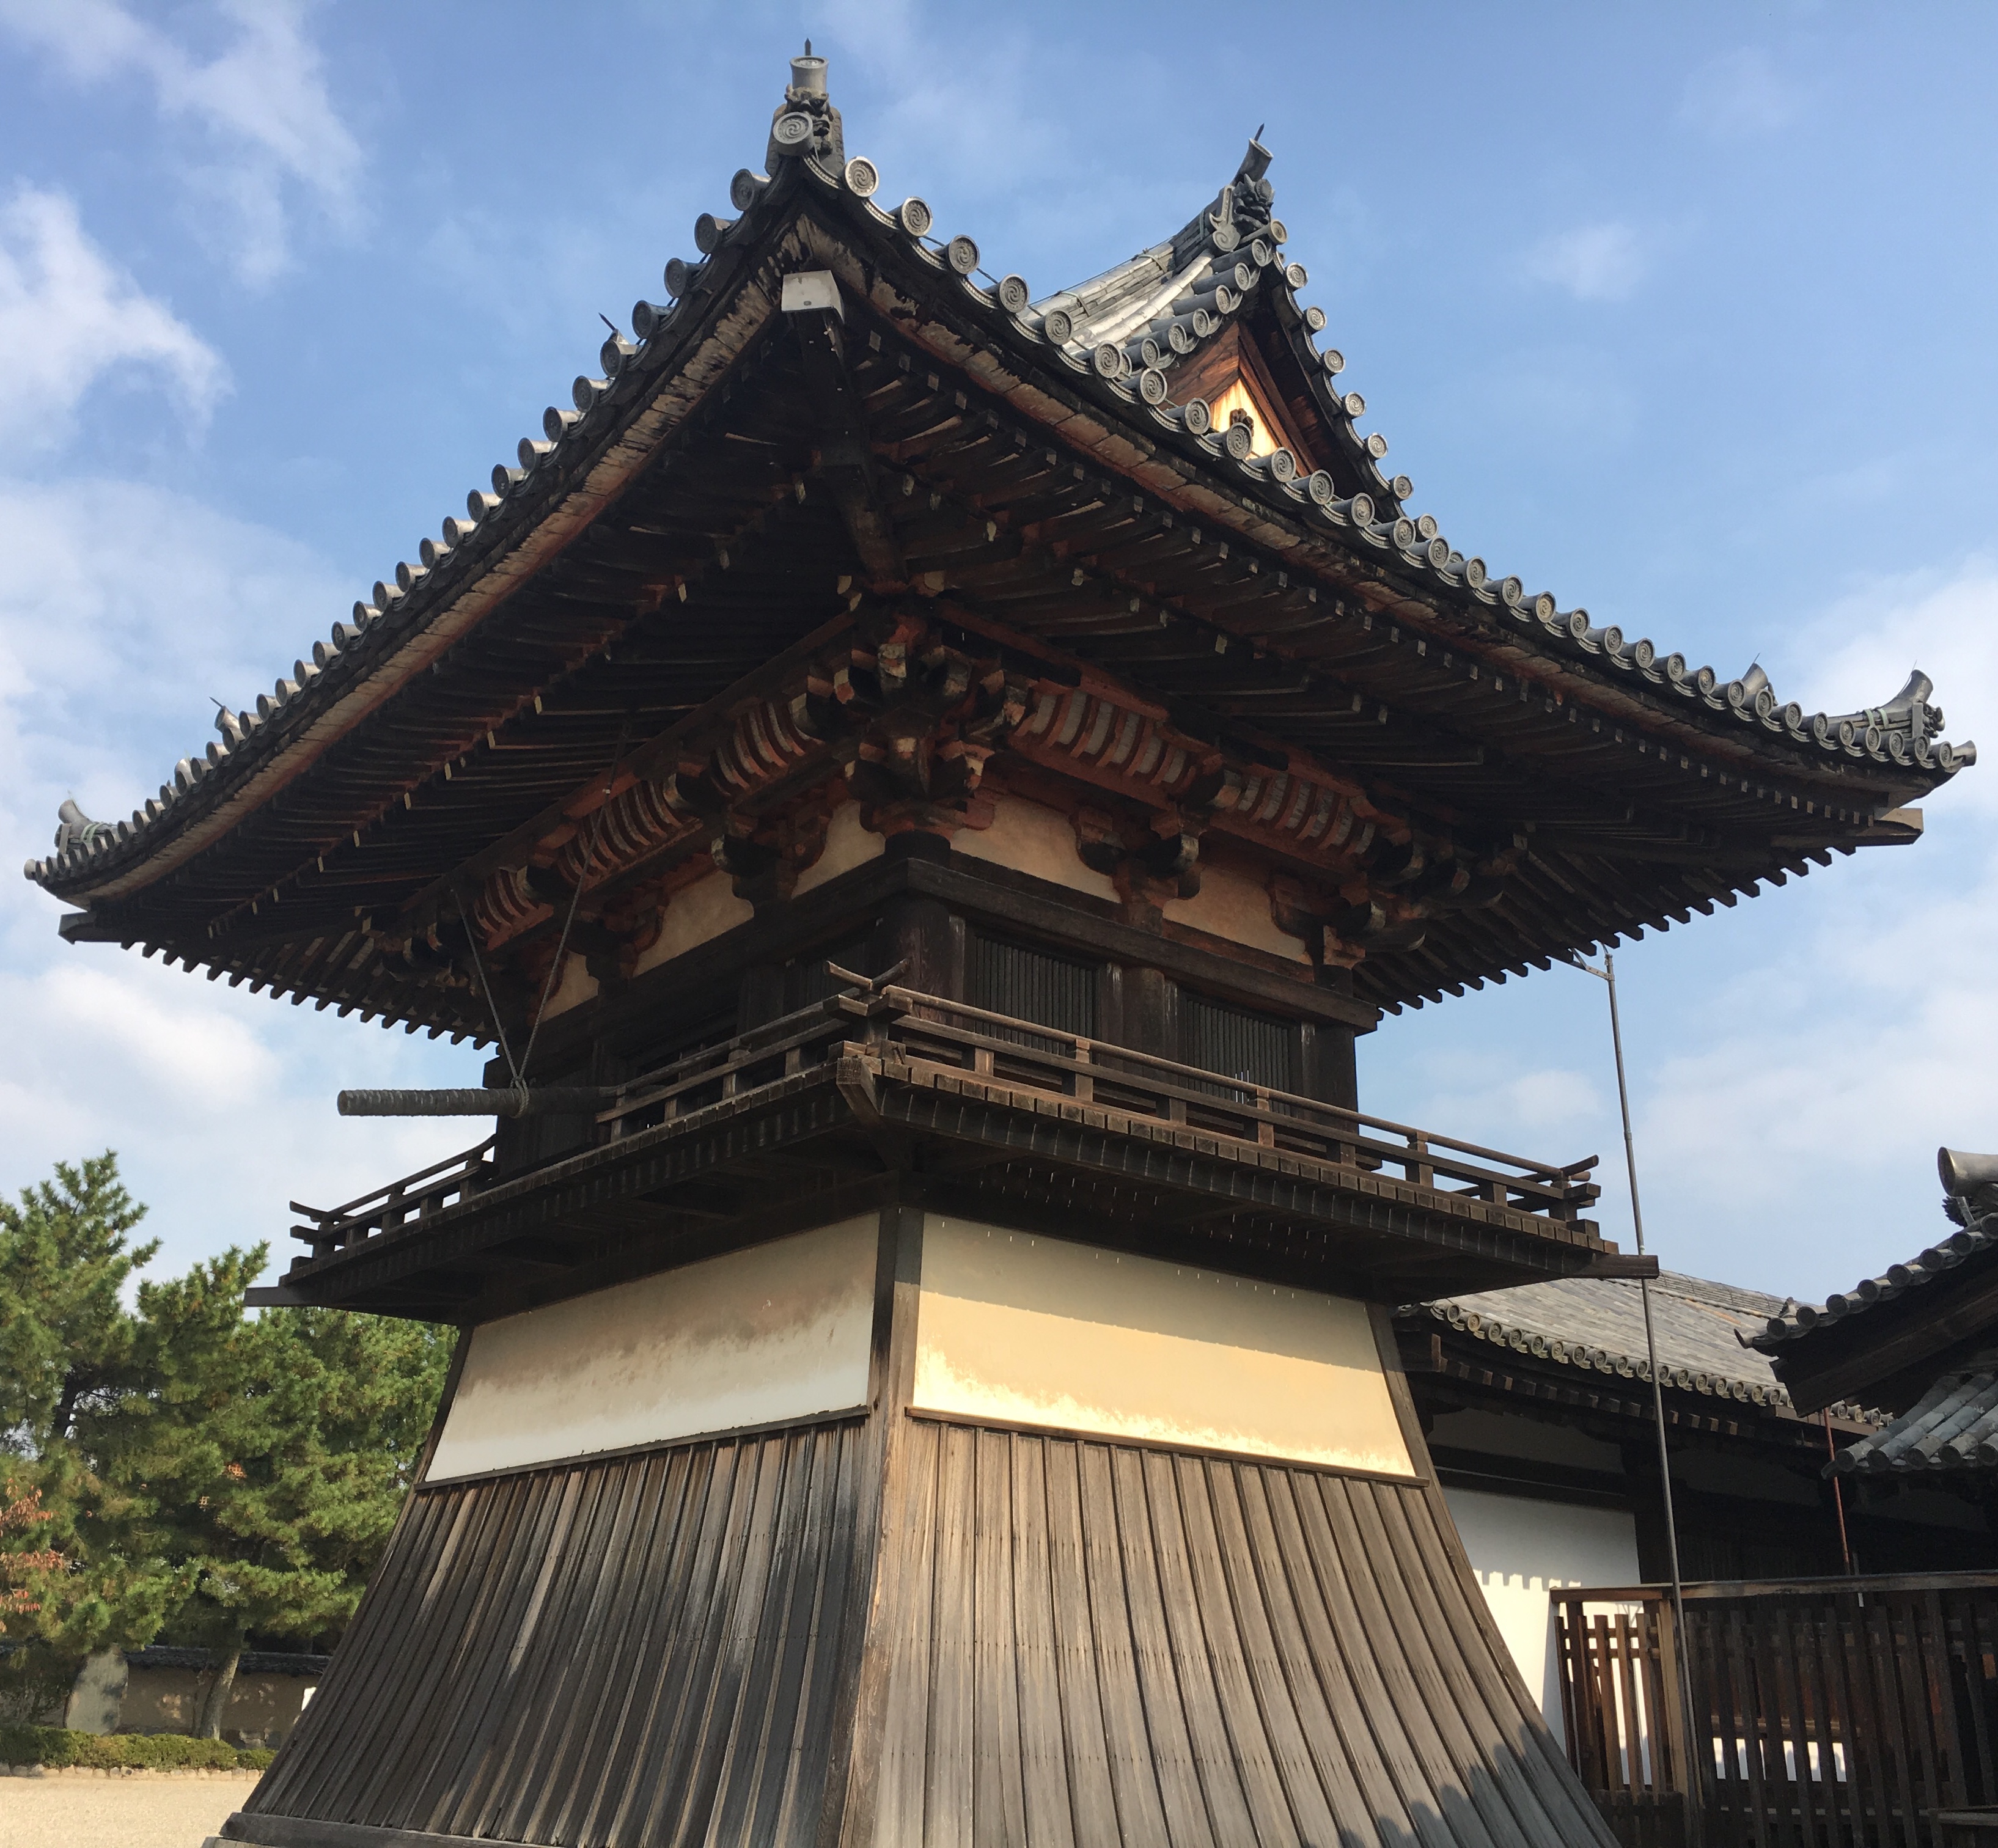 Famous nara period bell tower at Horyu-ji temple